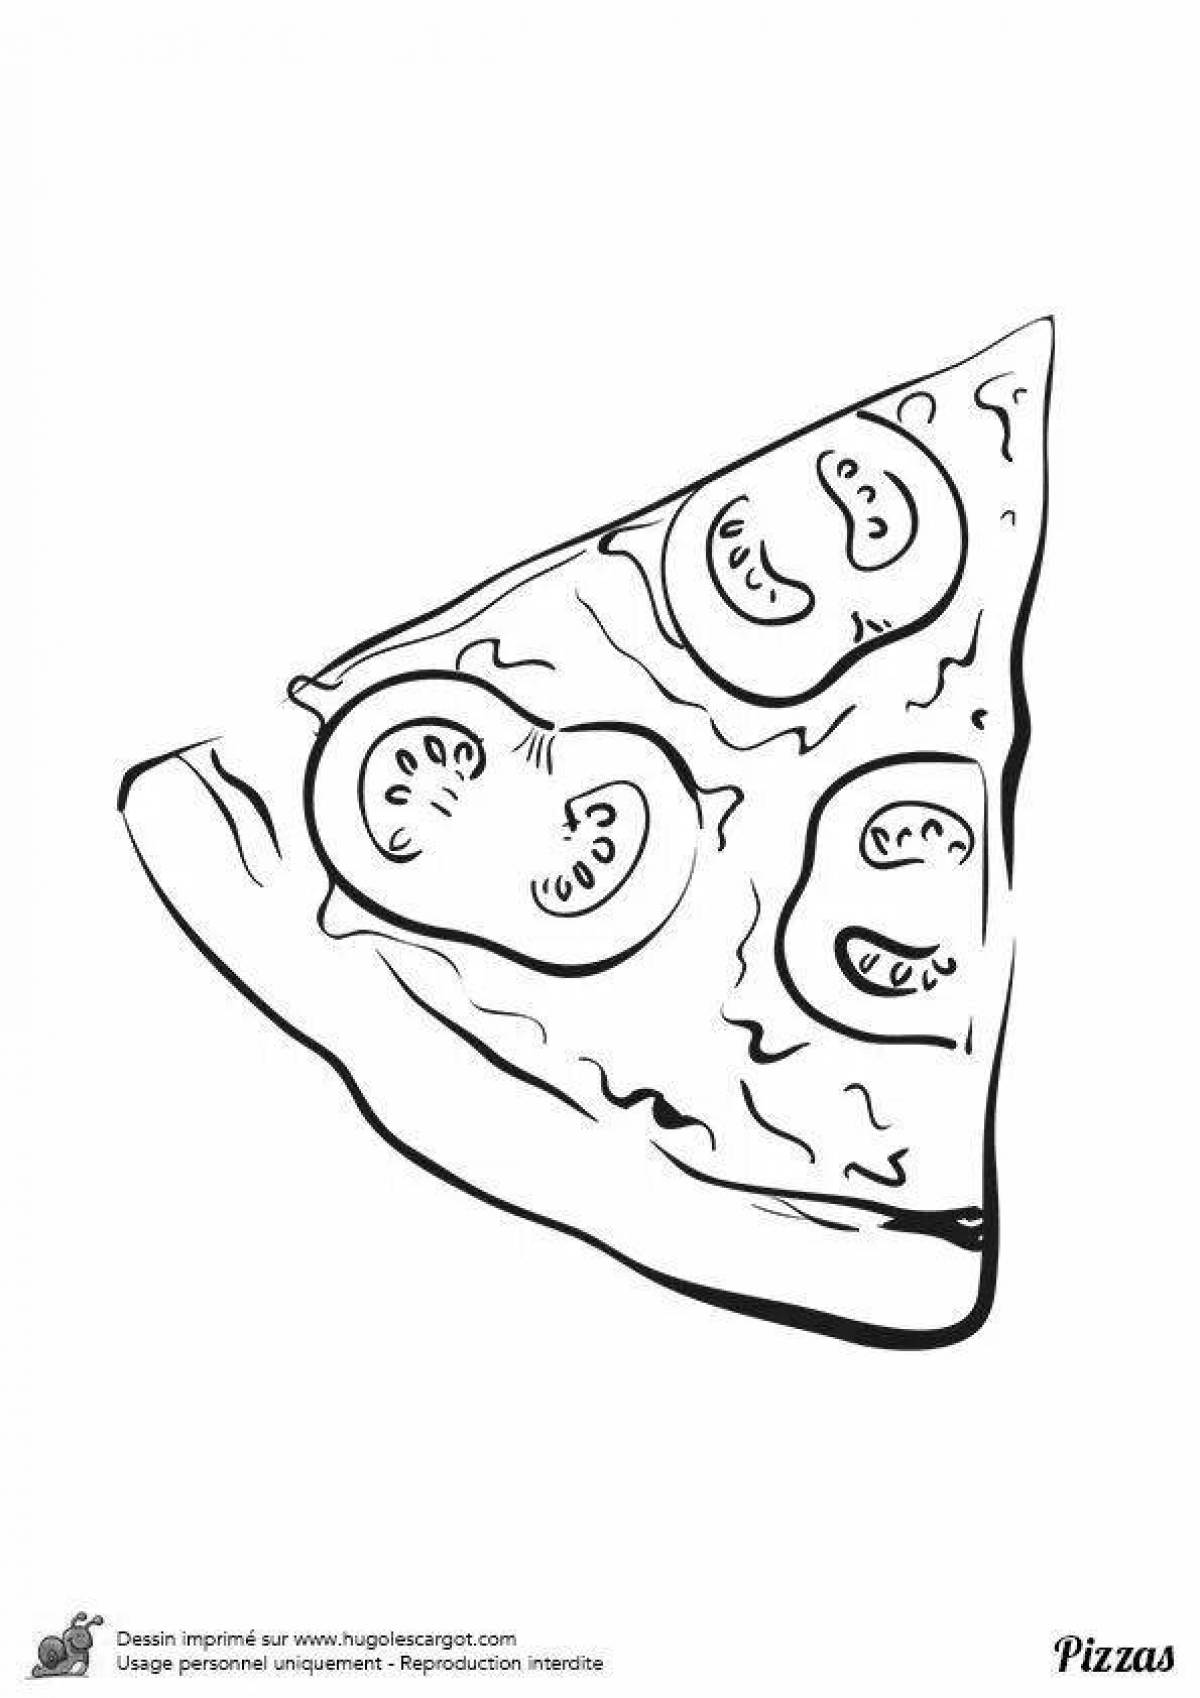 Delightful pizza coloring picture